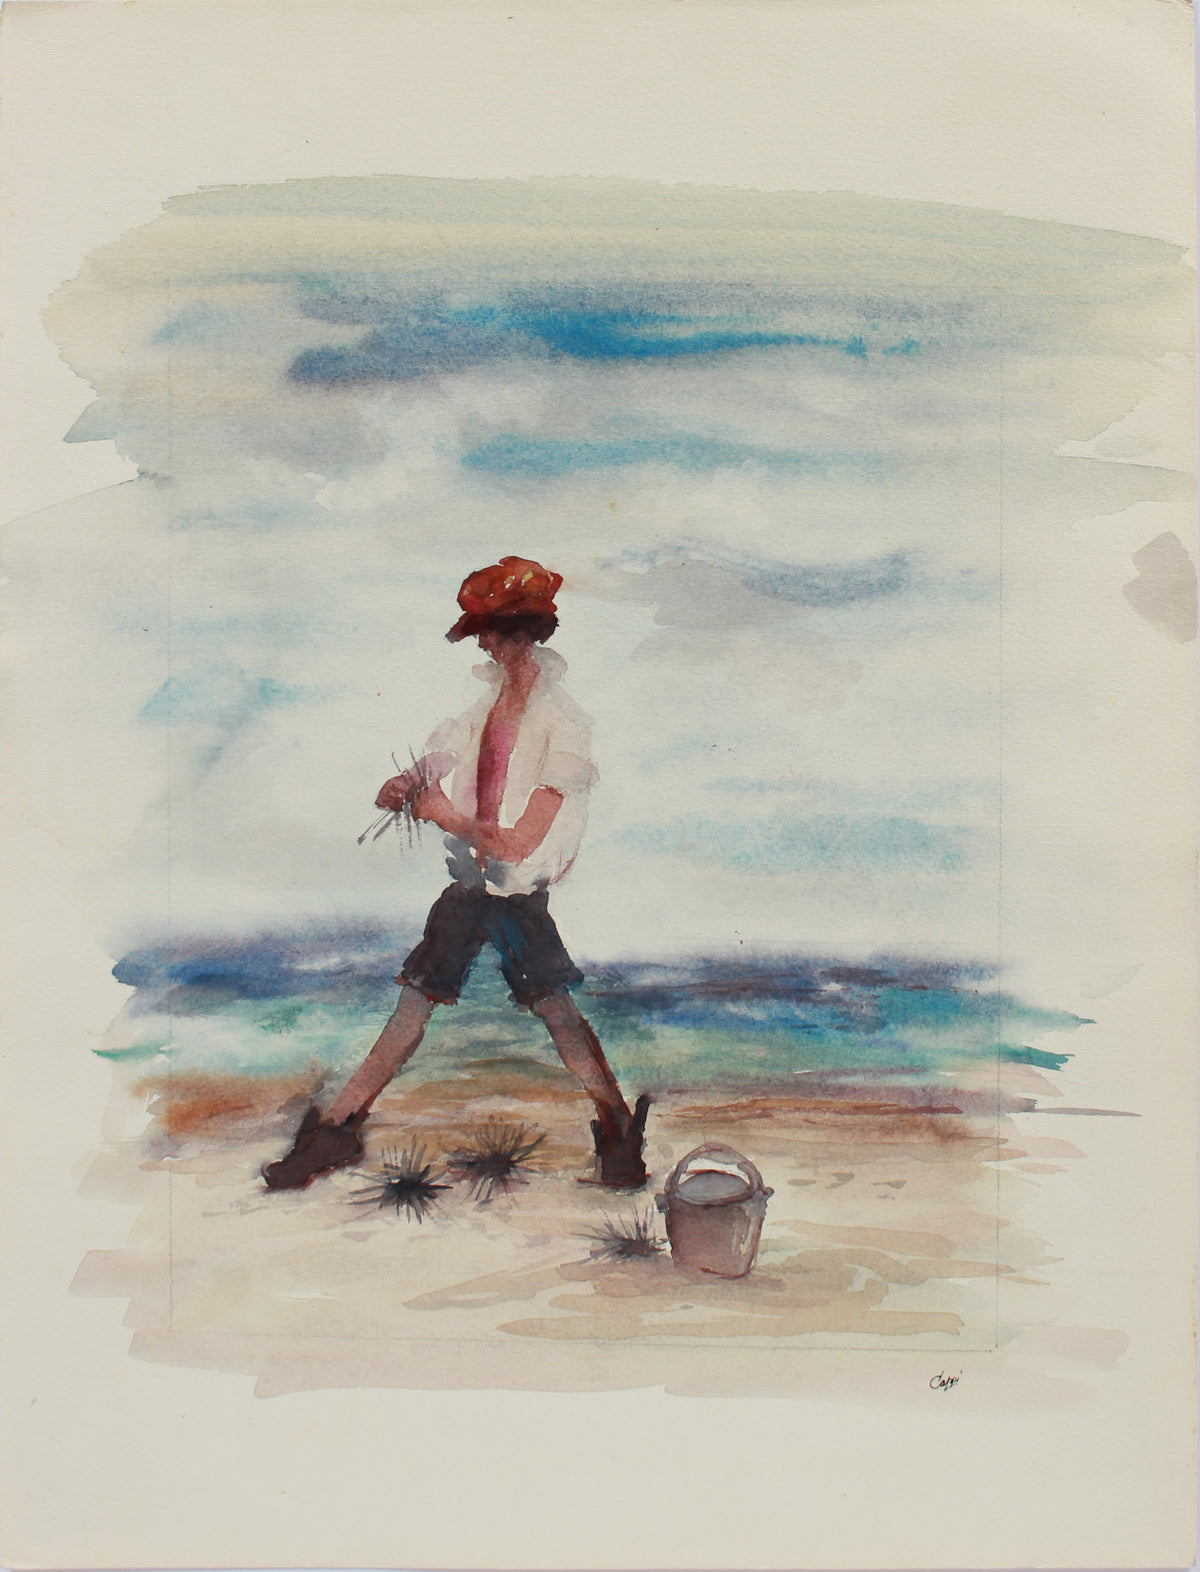 Collecting Shells at Cape Cod &lt;br&gt;1980s Watercolor &lt;br&gt;&lt;br&gt;#A9474